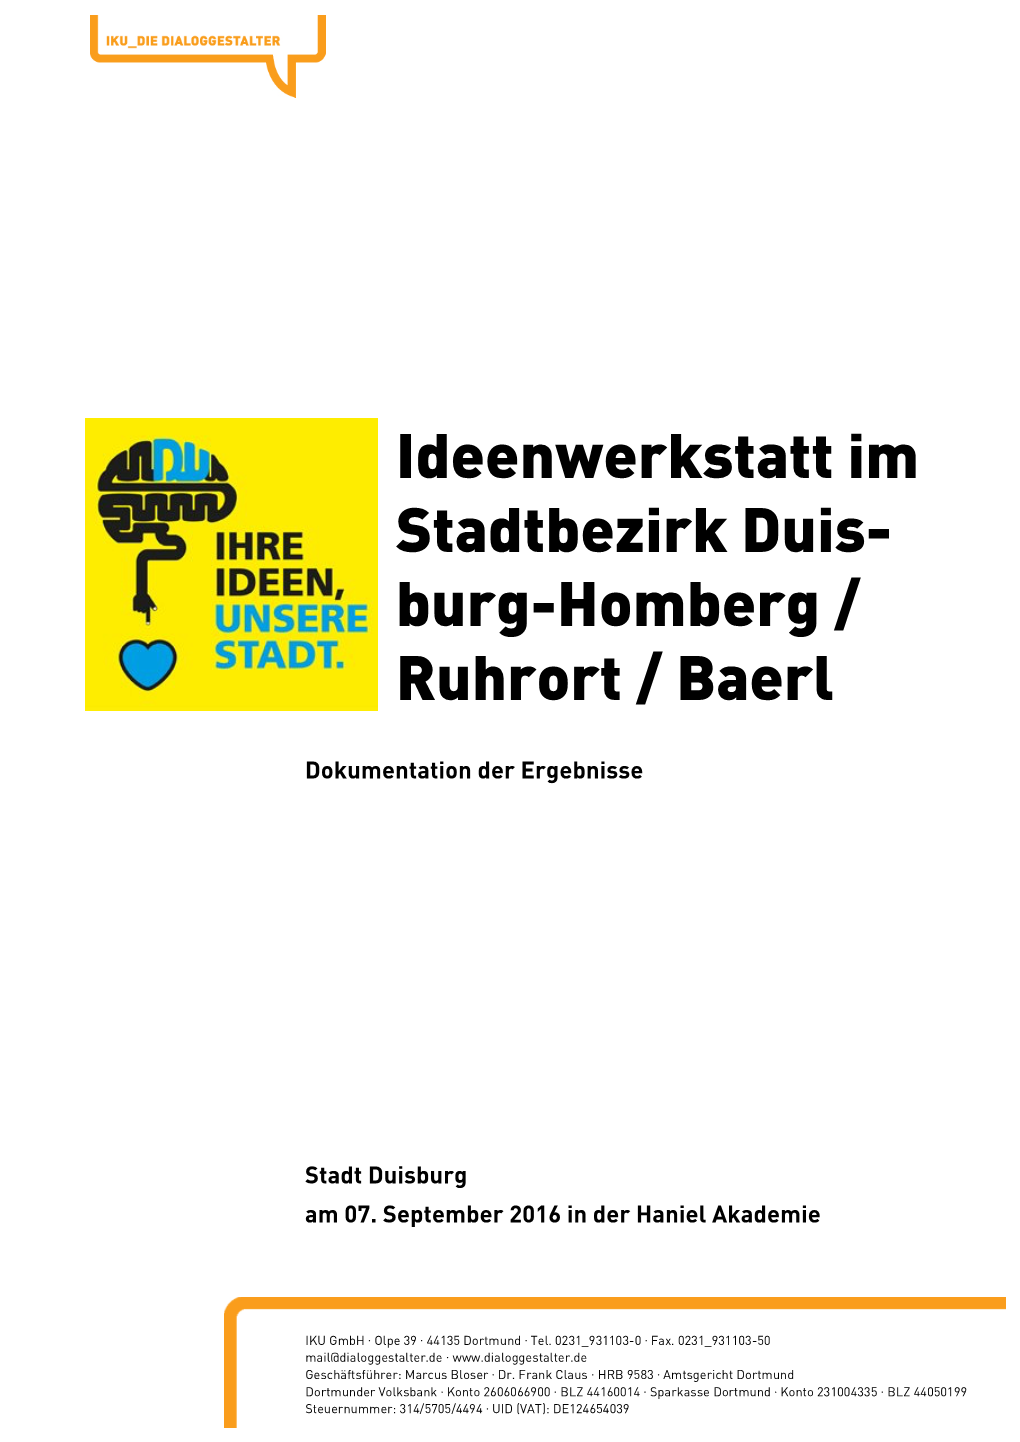 Ideenwerkstatt Im Stadtbezirk Duis- Burg-Homberg / Ruhrort / Baerl